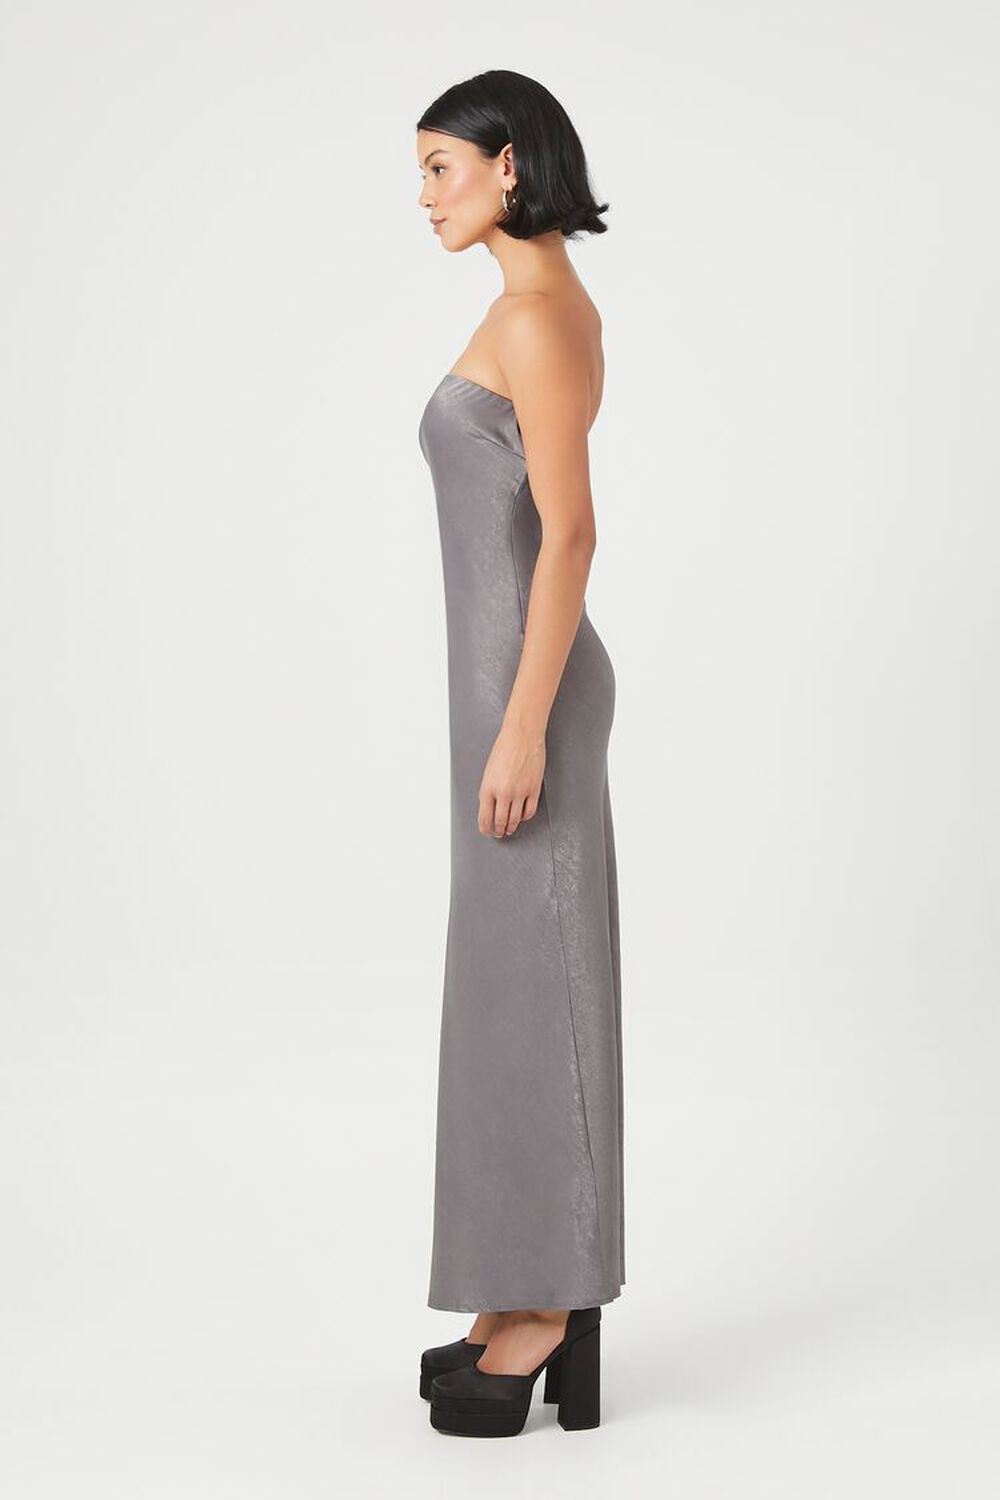 CHARCOAL Satin Strapless Maxi Dress, image 2